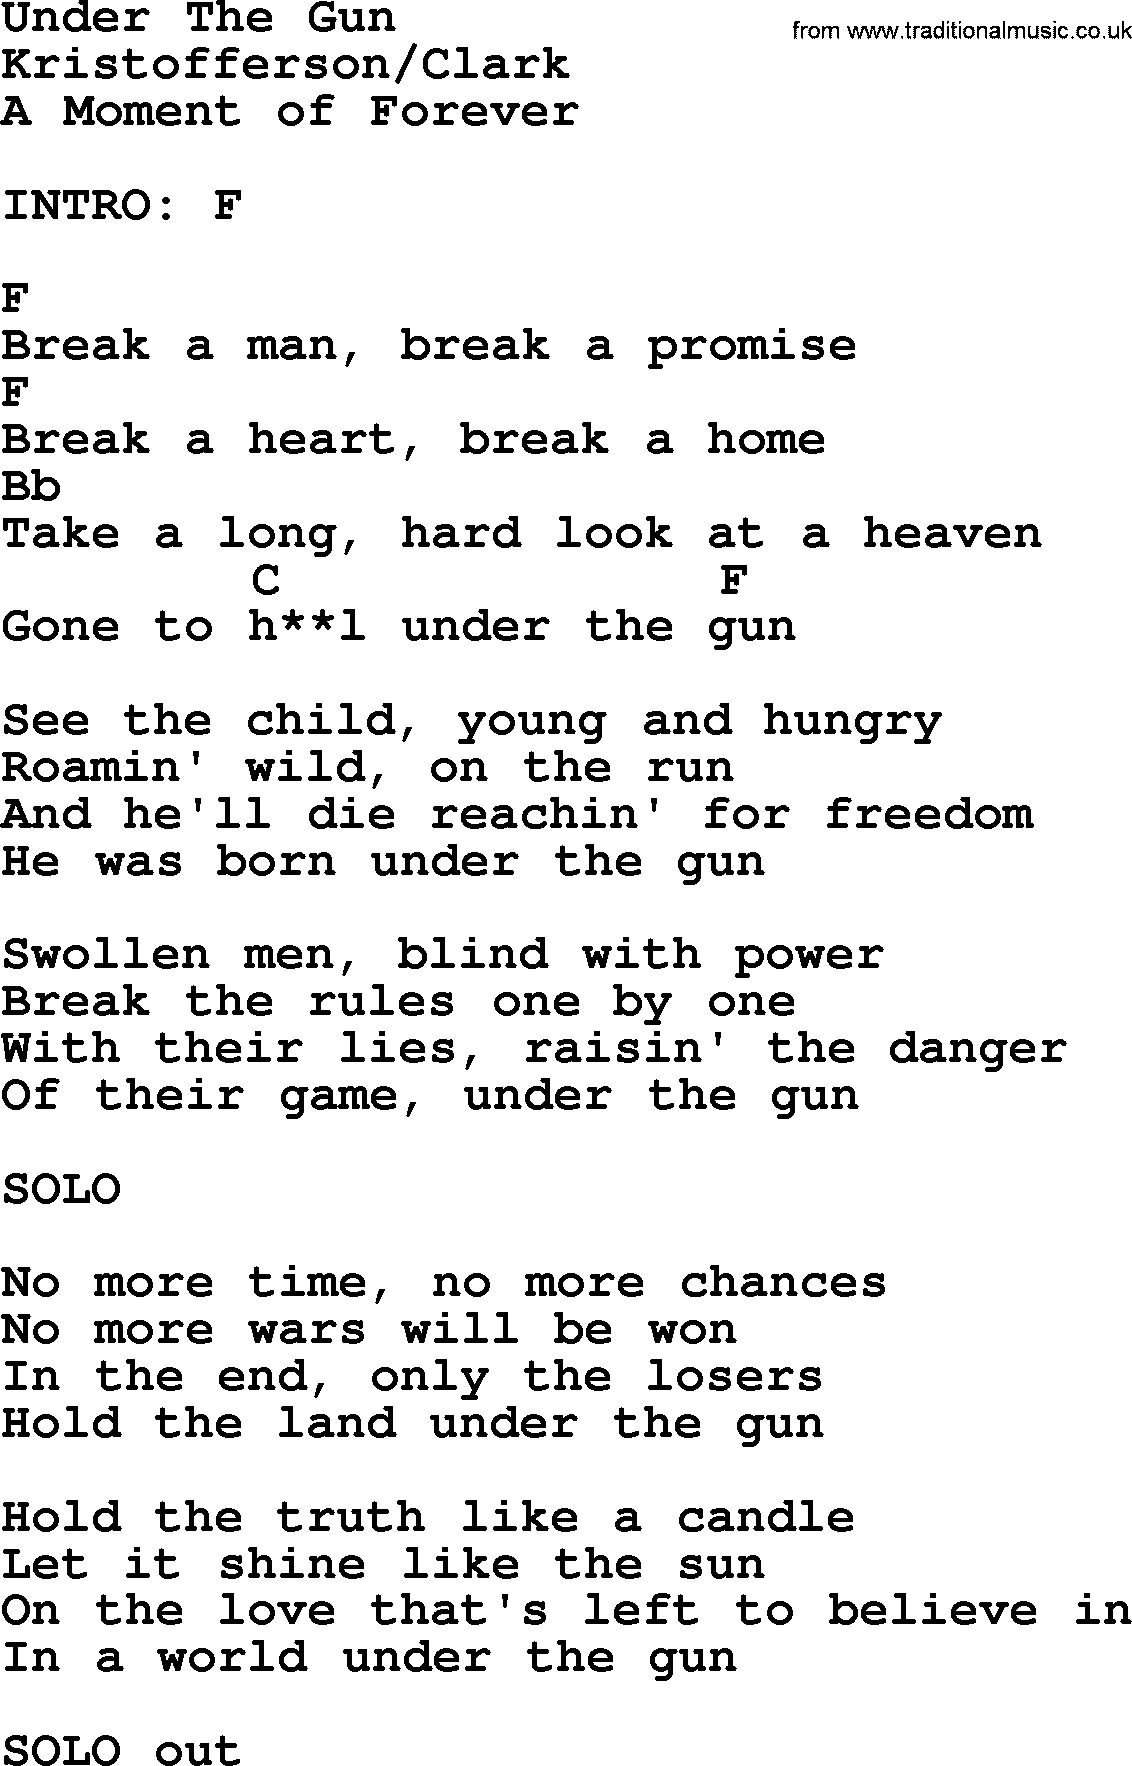 Kris Kristofferson song: Under The Gun lyrics and chords